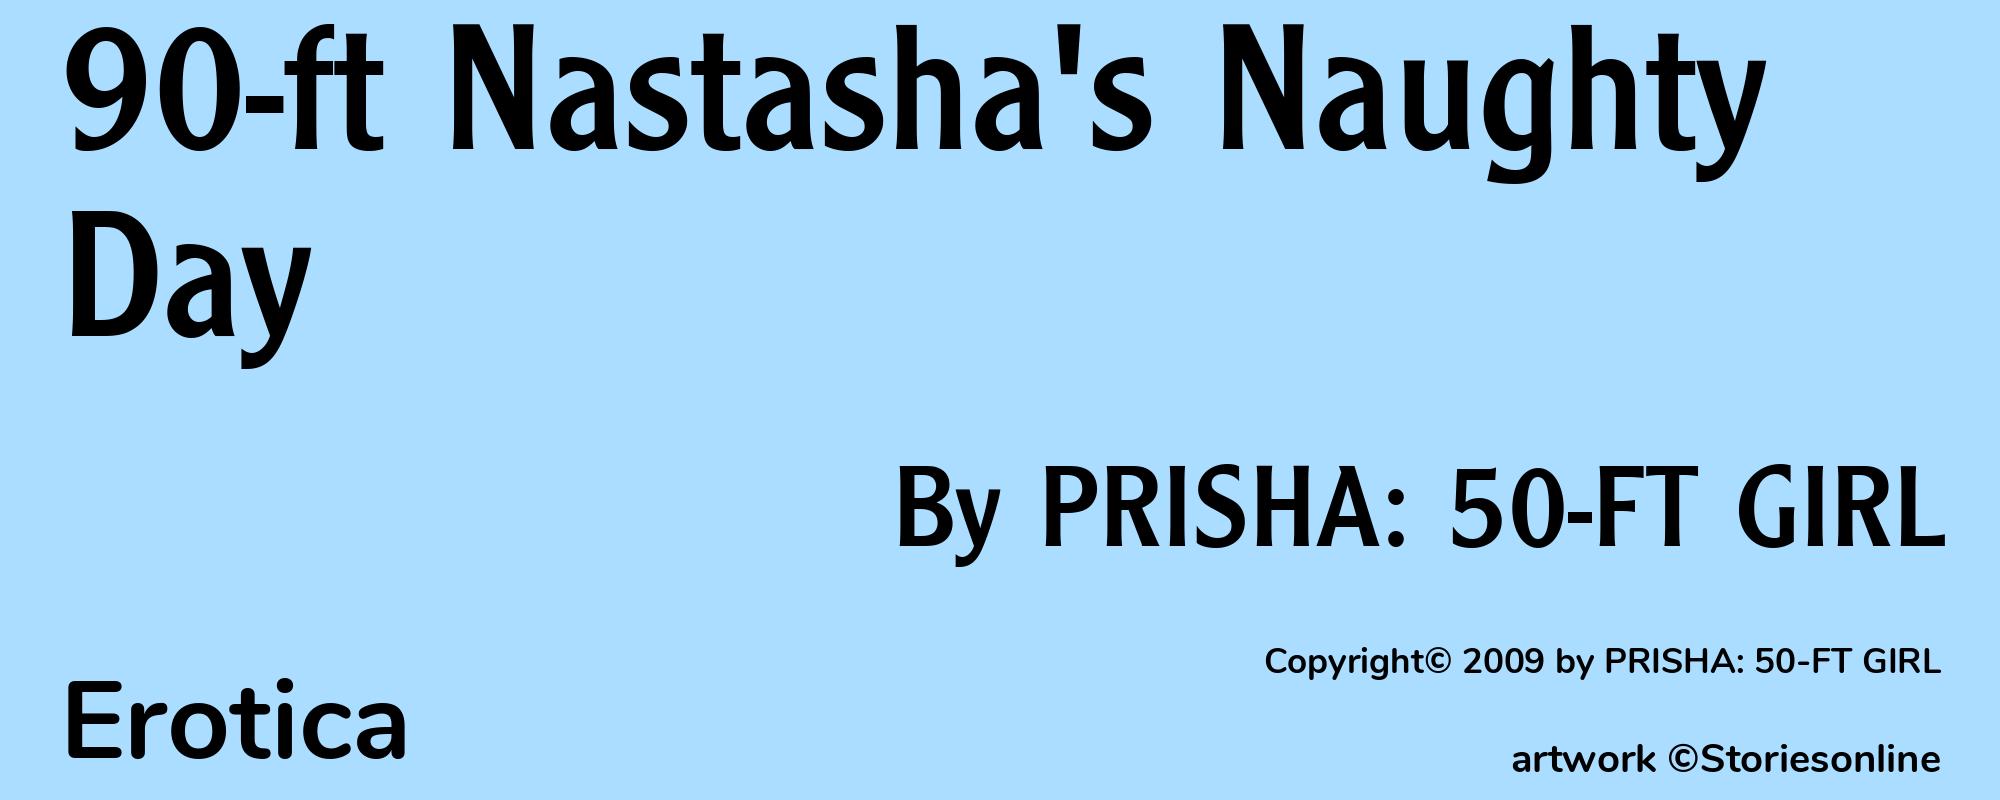 90-ft Nastasha's Naughty Day - Cover